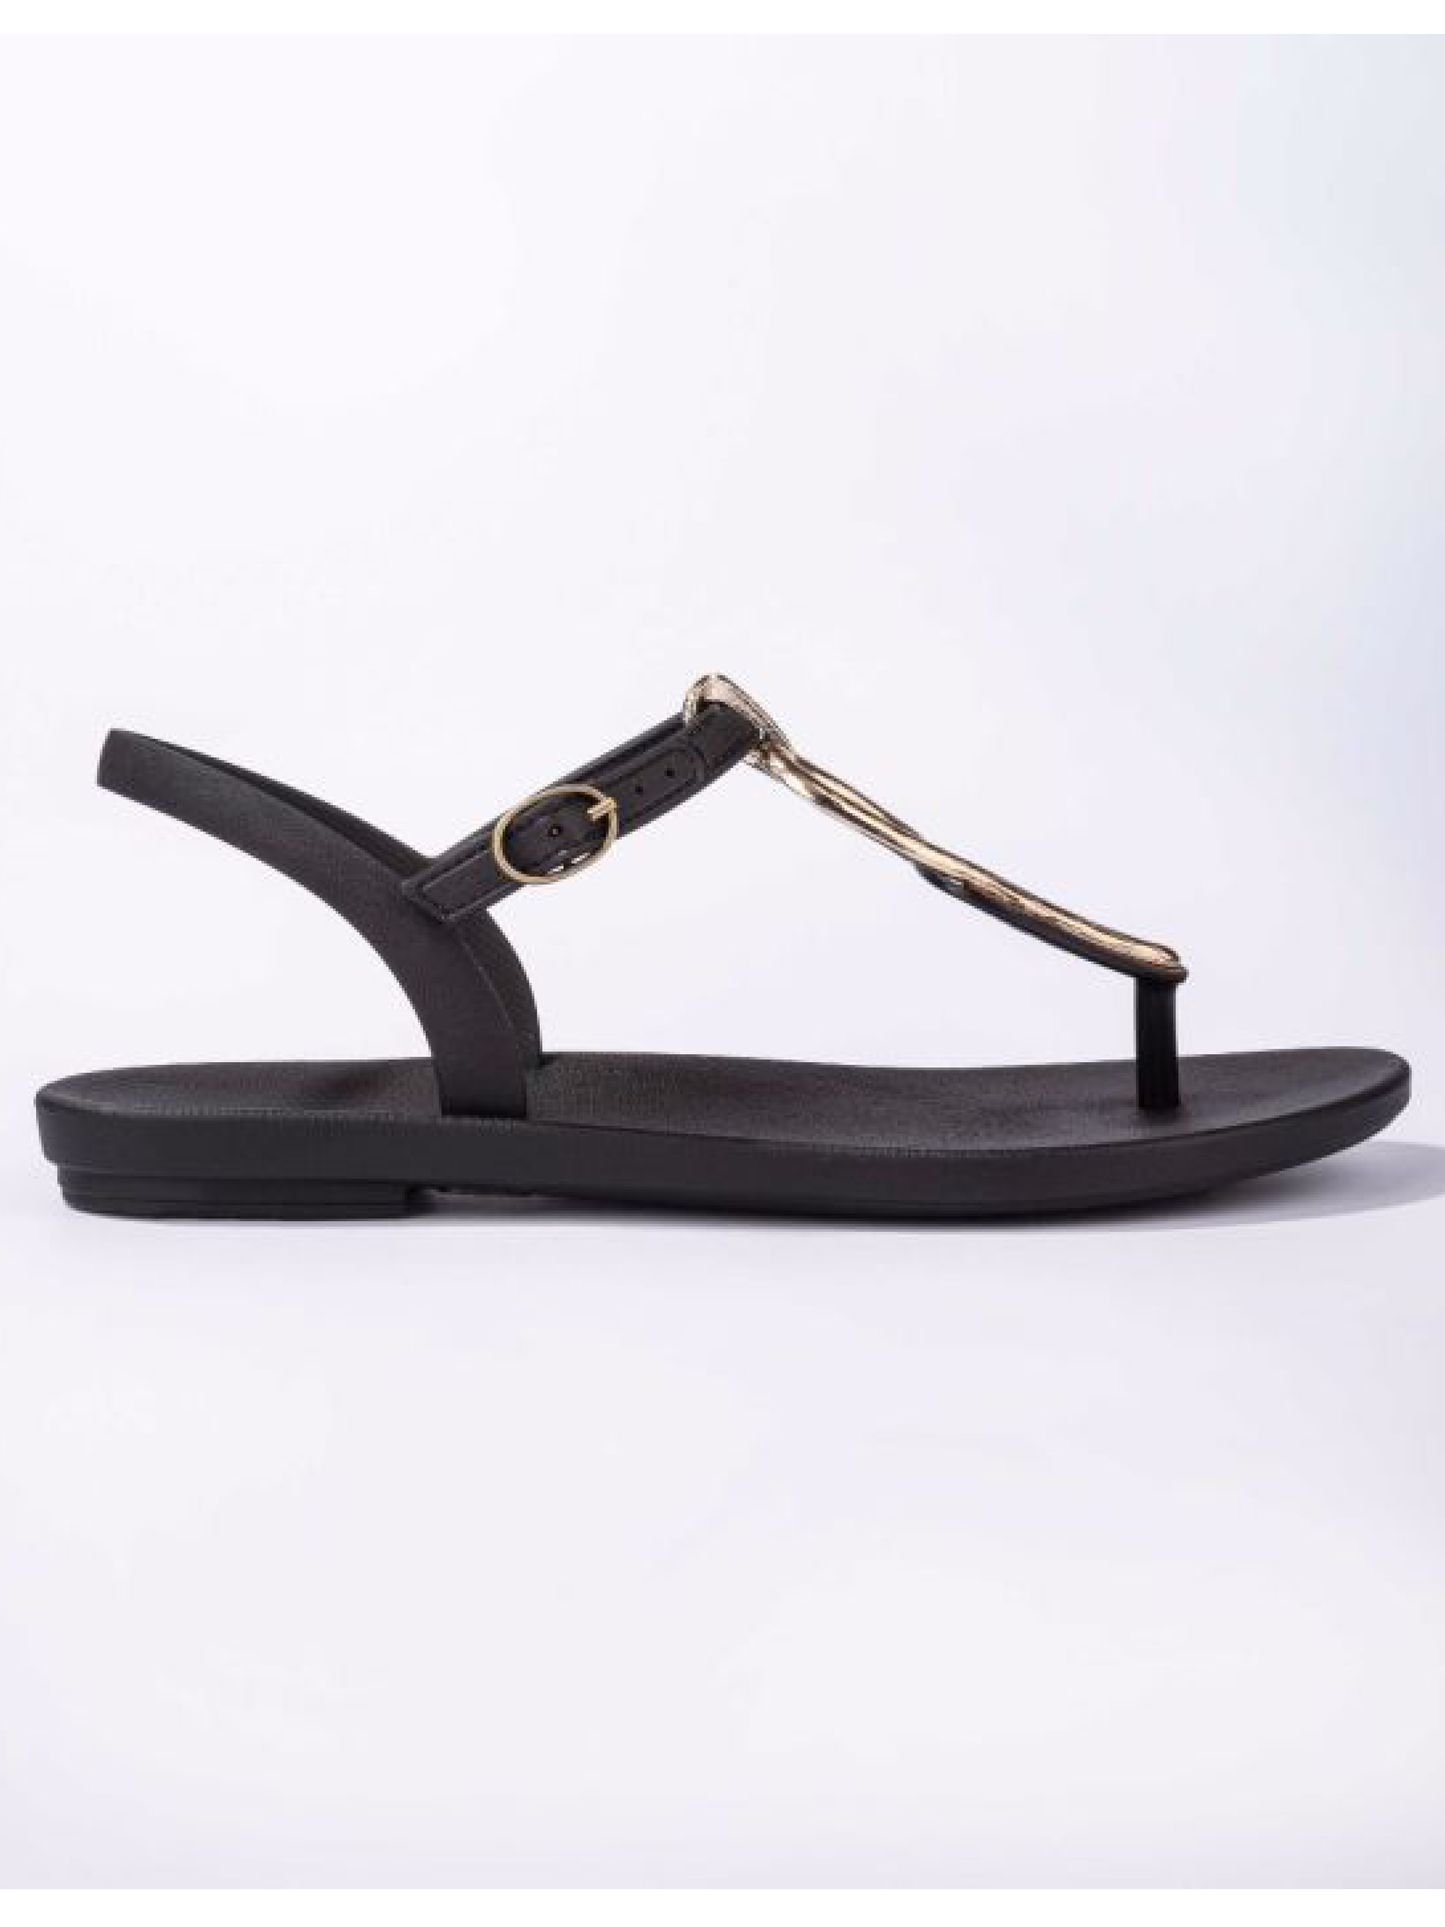 Black Ipanema decor sandal sizes 3-8